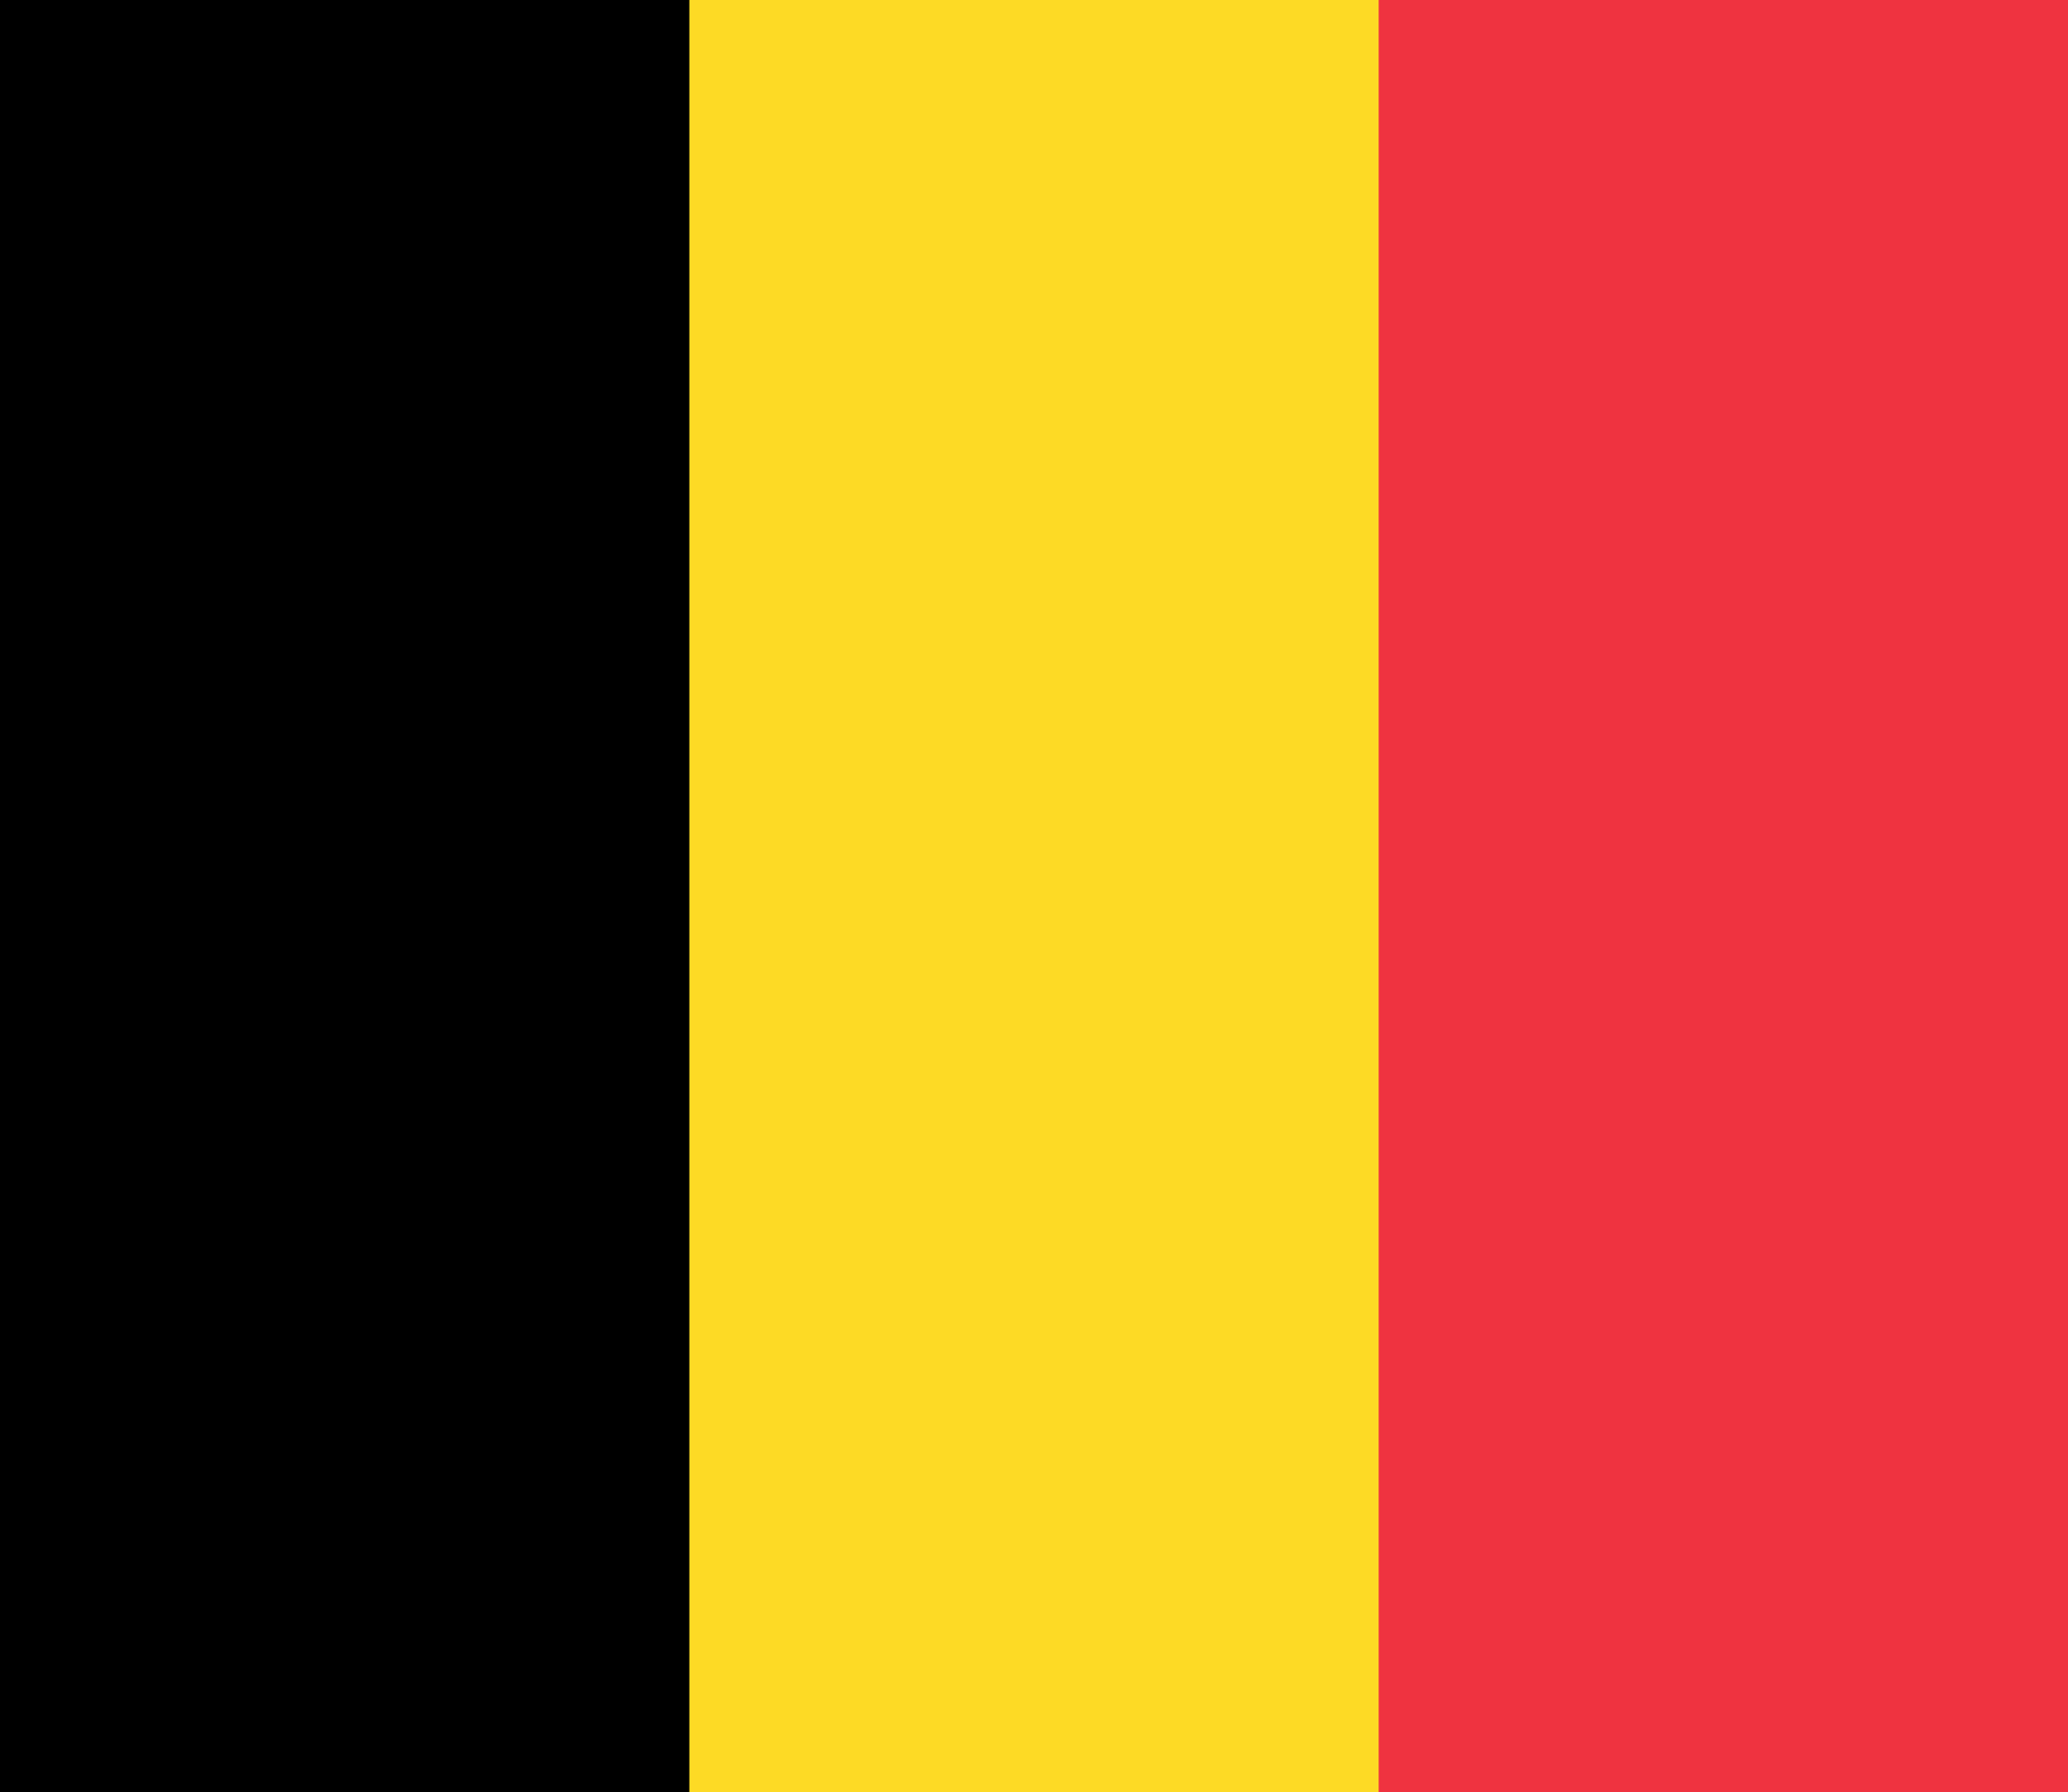 Belgian flag.png